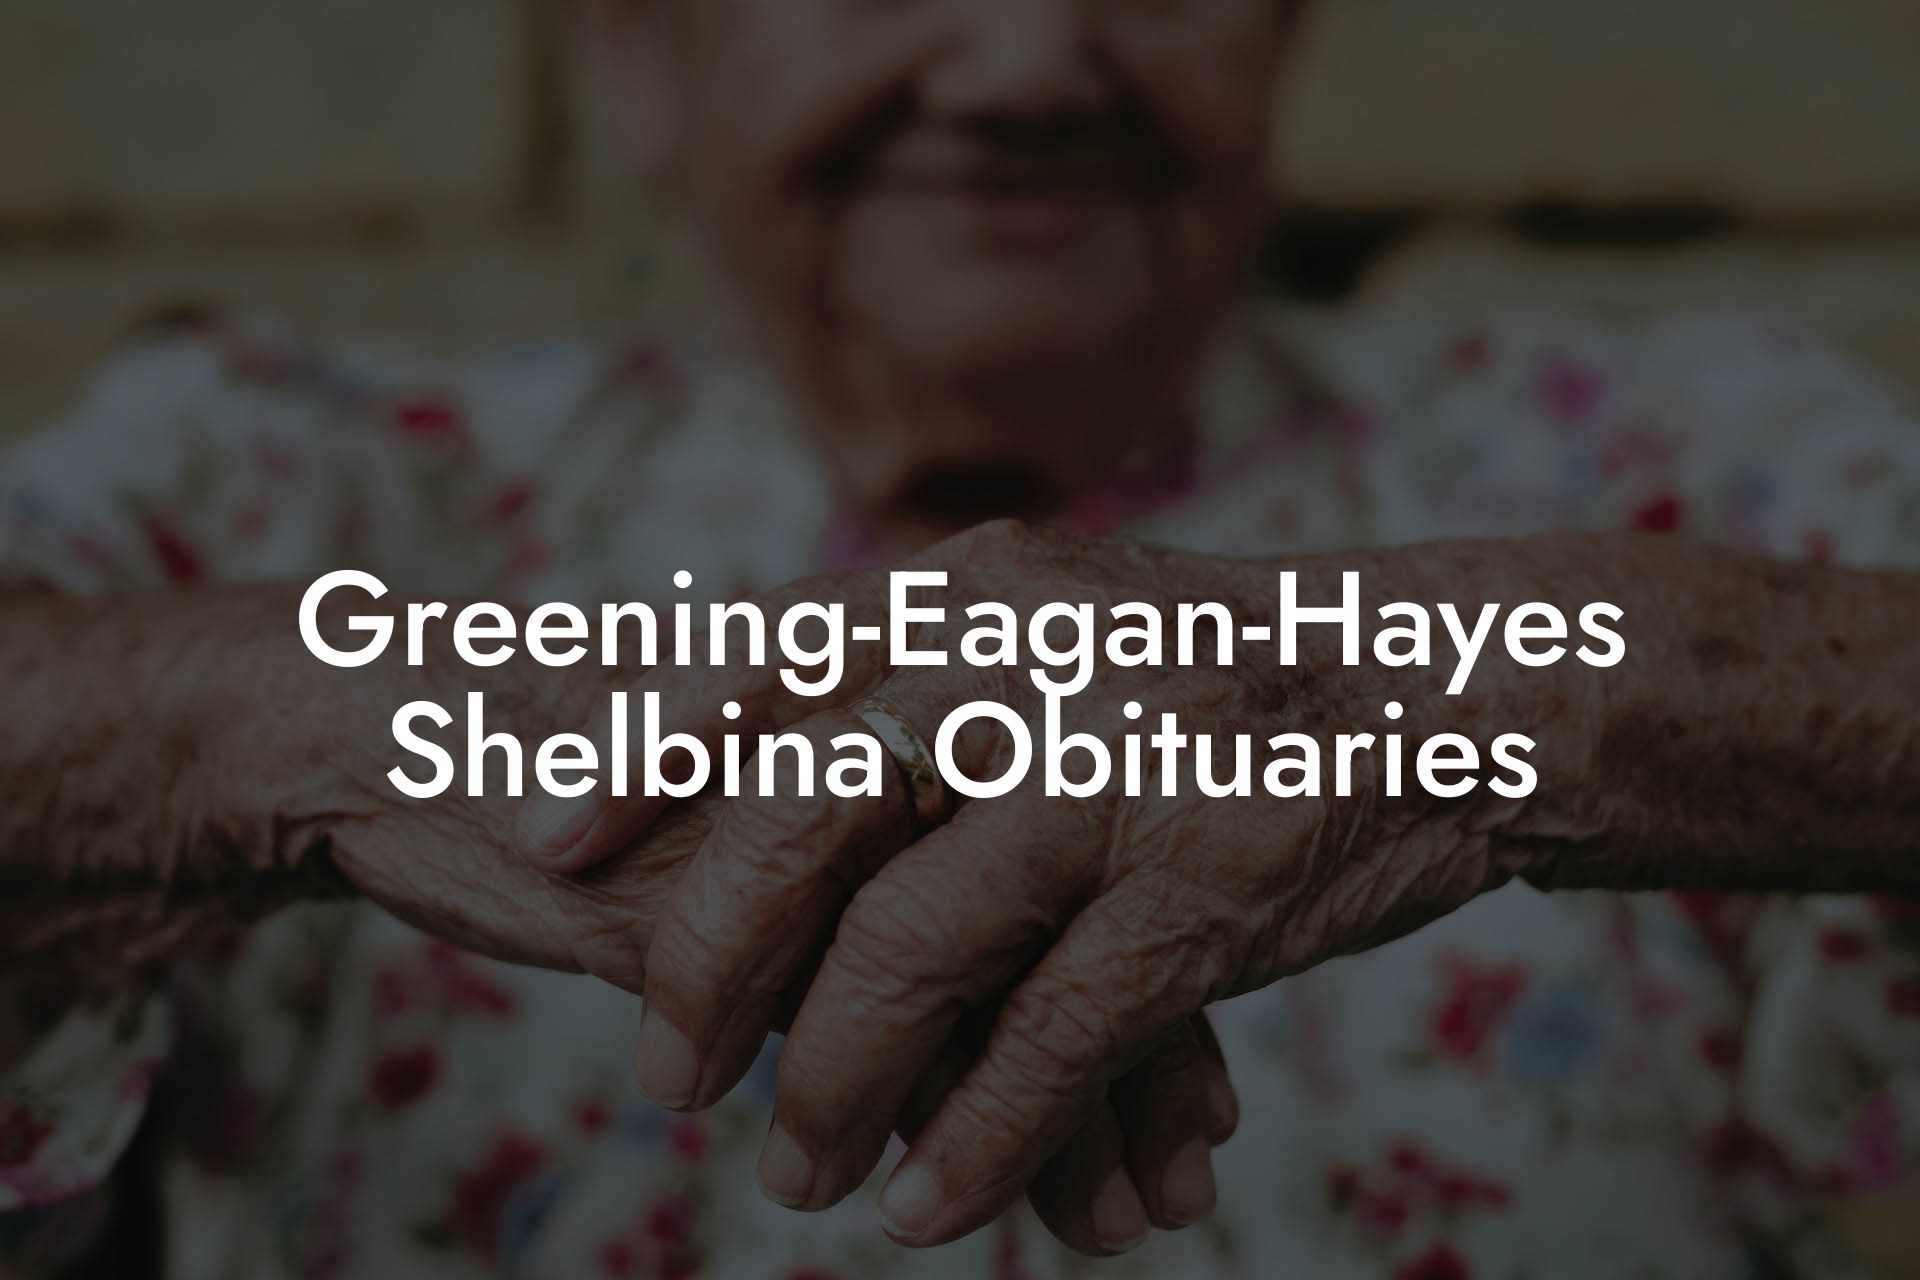 Greening-Eagan-Hayes Shelbina Obituaries